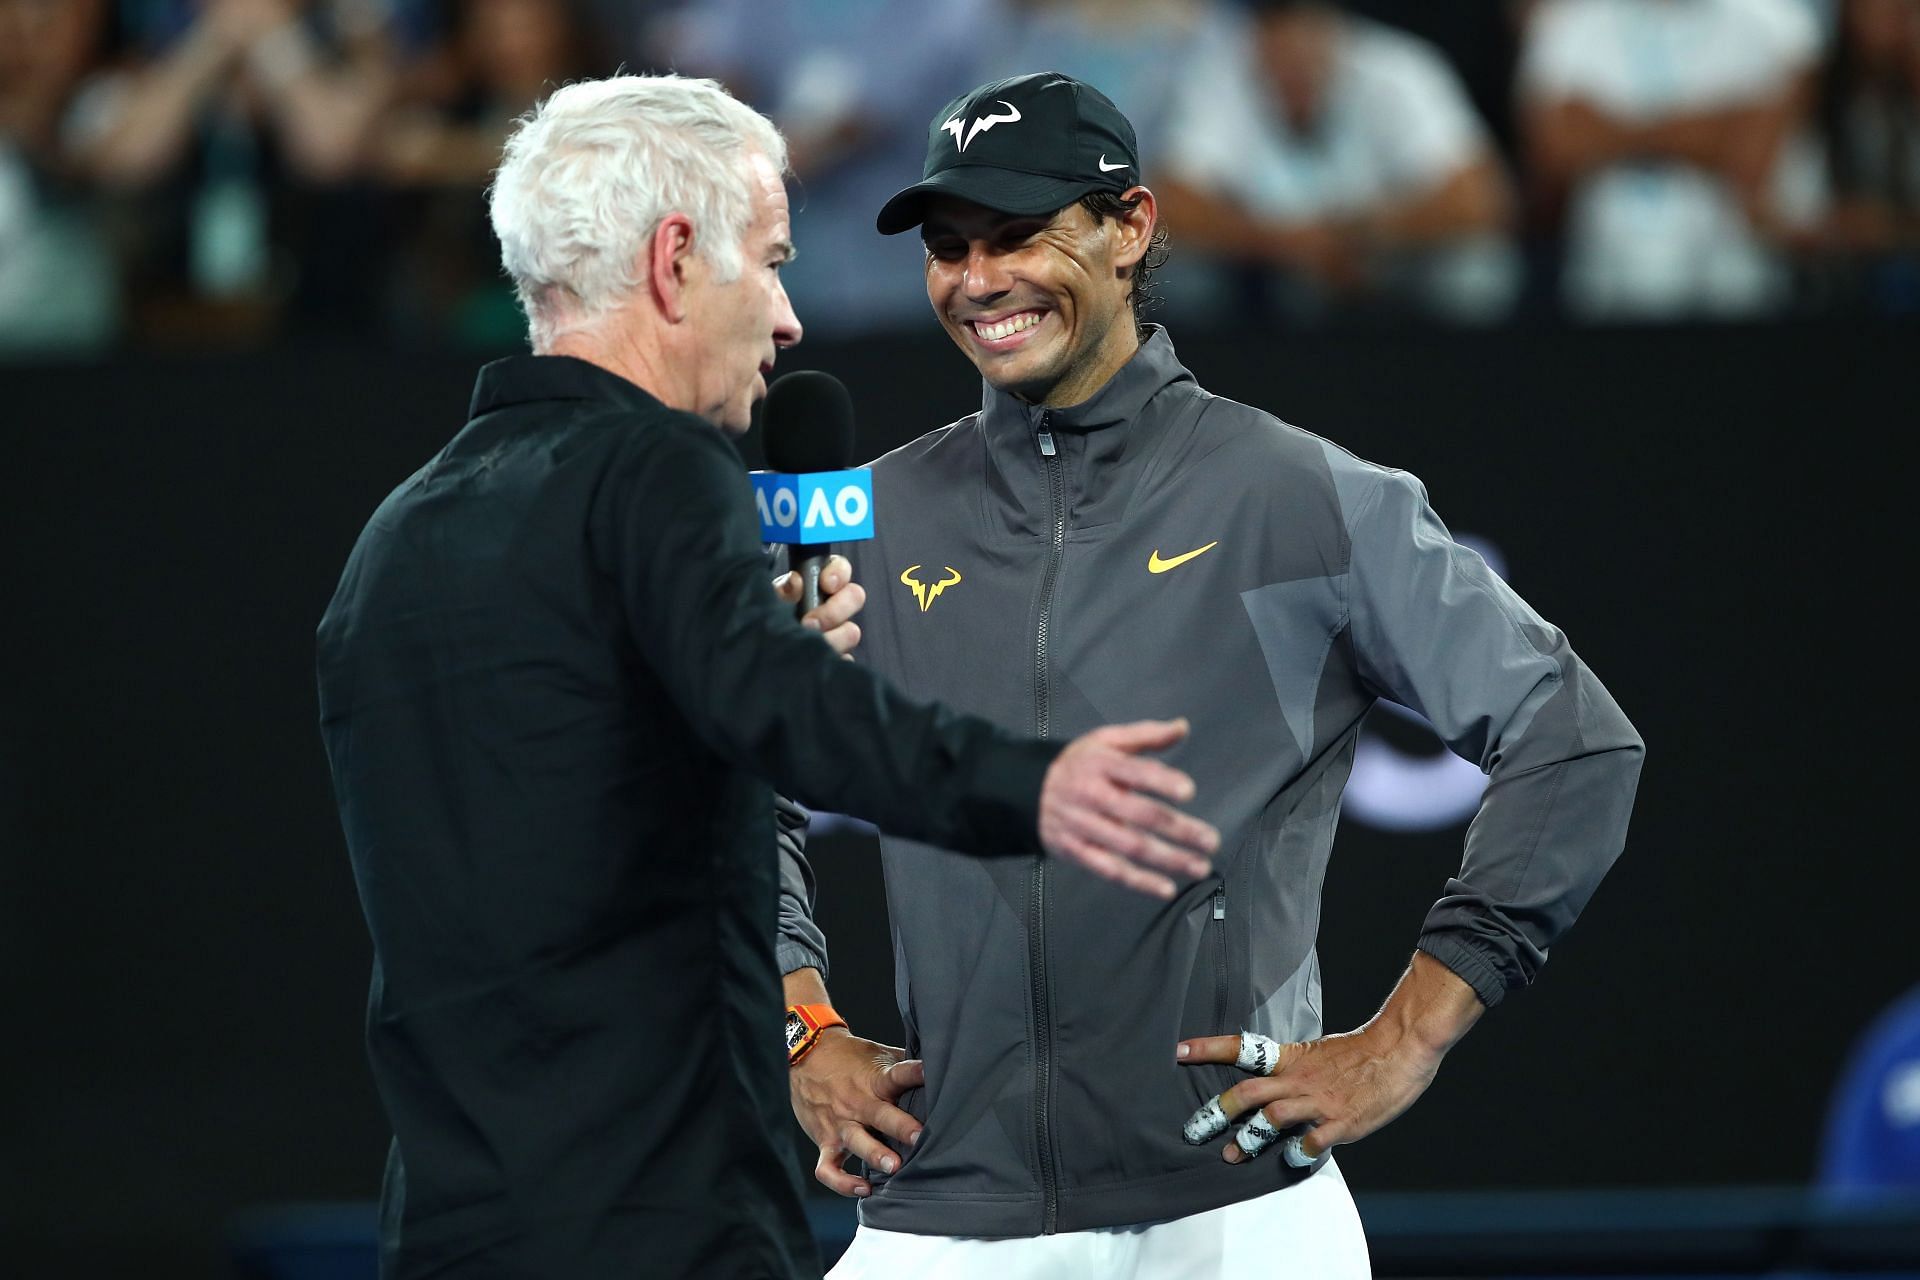 John McEnroe interviews Rafael Nadal at the Australian Open